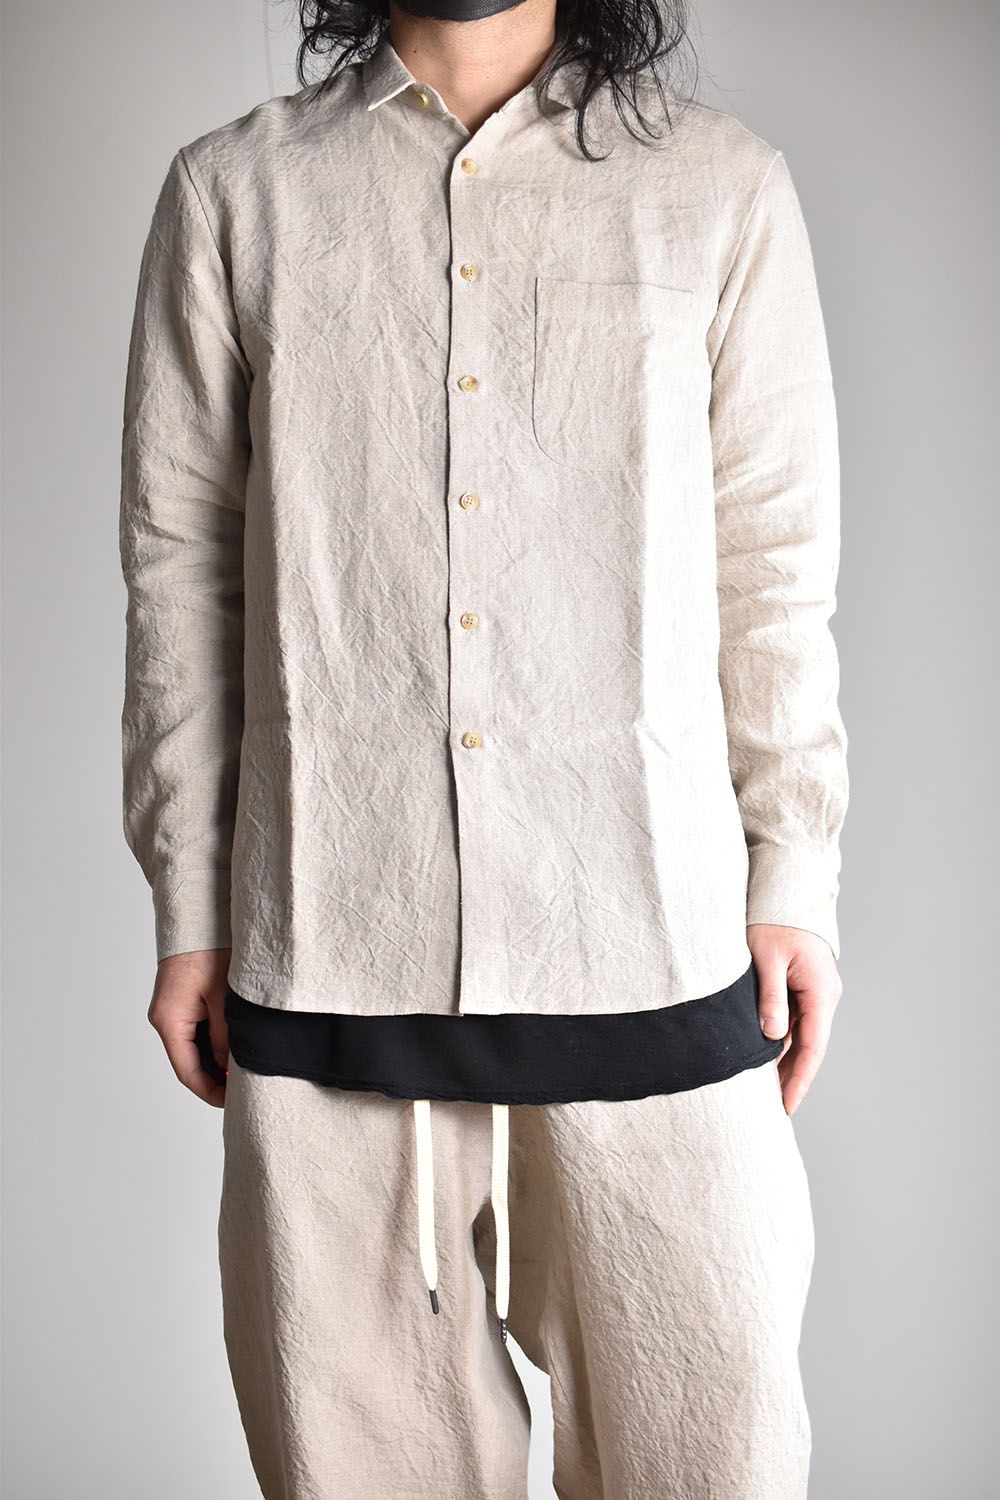 ISAMU KATAYAMA BACKLASH - Linen Shirts